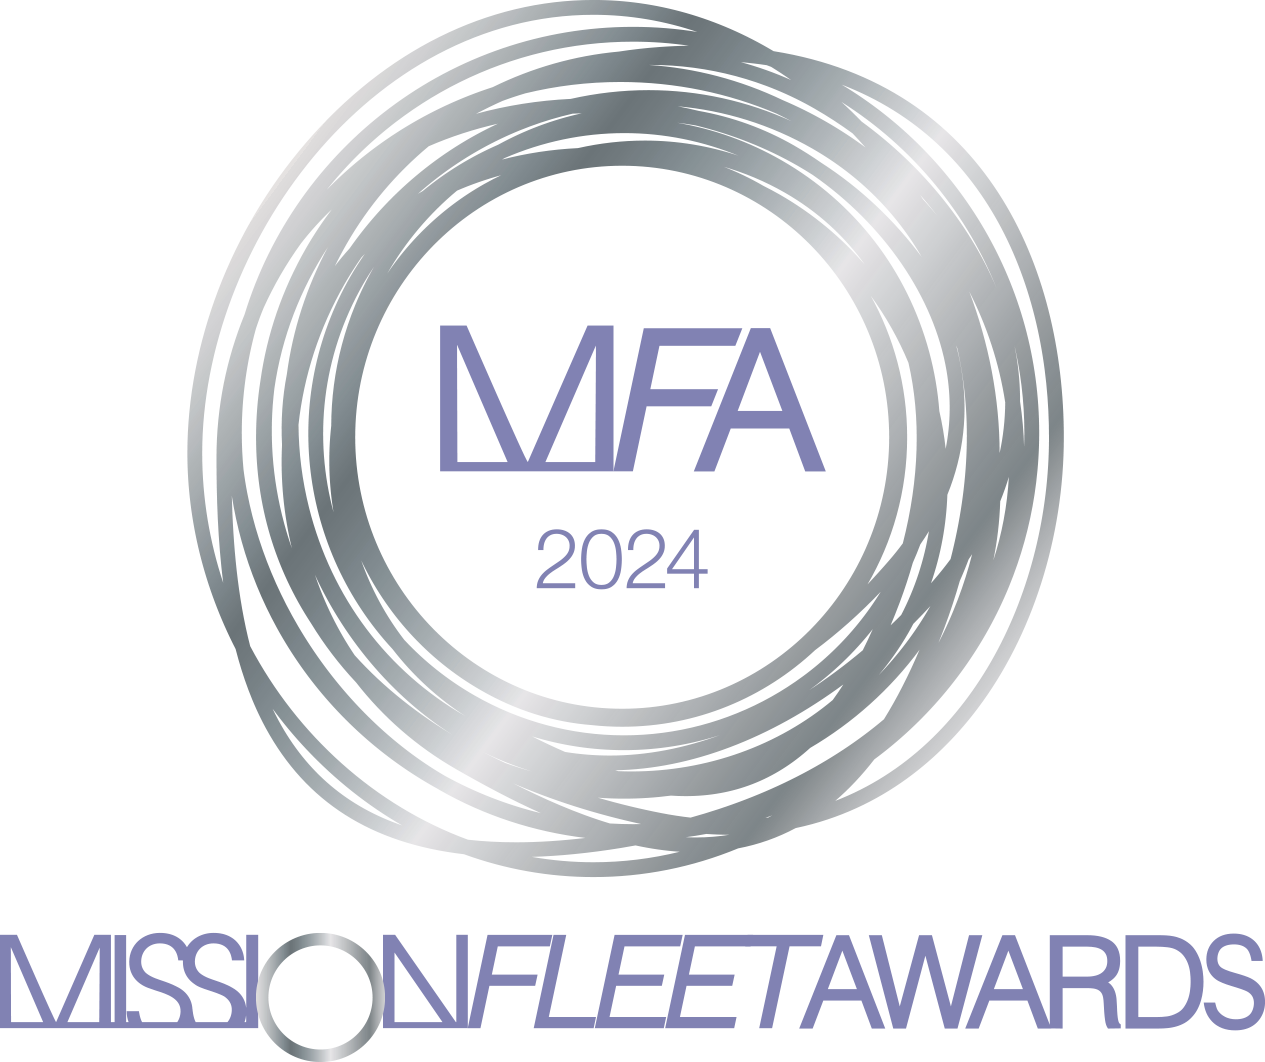 Mission fleet awards